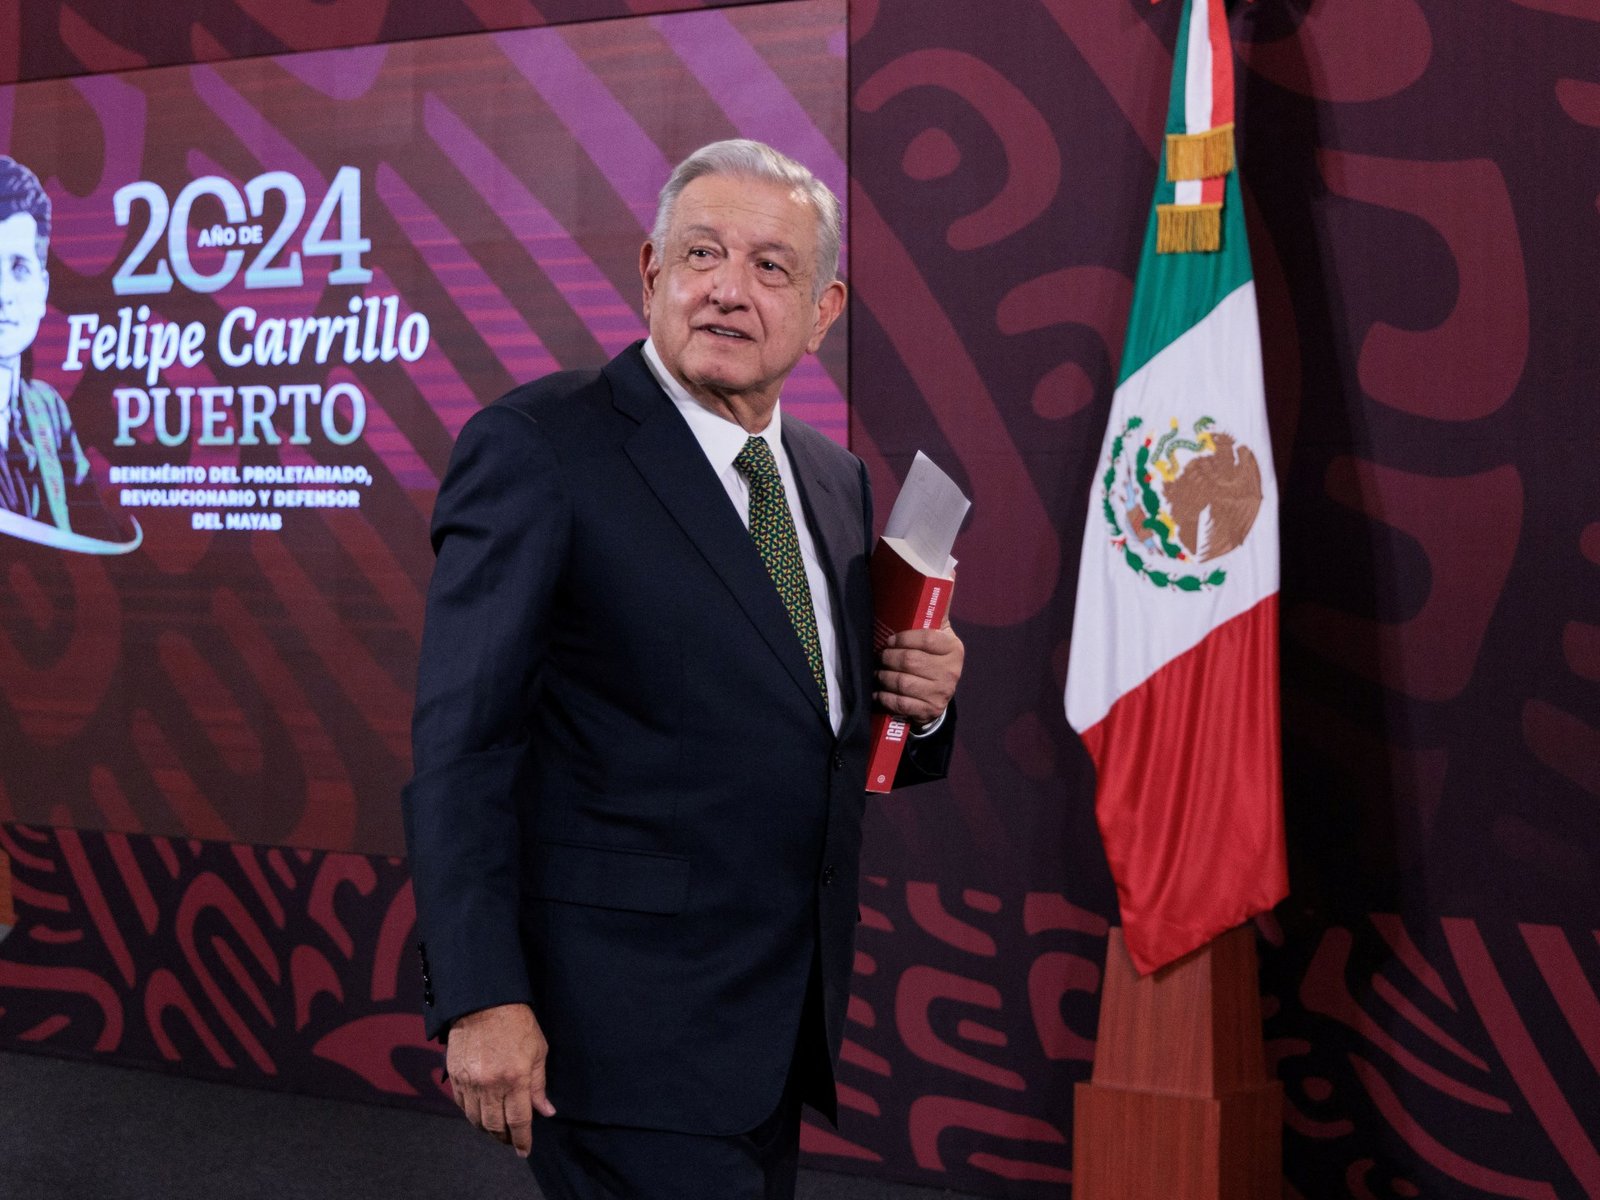 Amid diplomatic spat Mexico grants former Ecuadorian vice president asylum | News